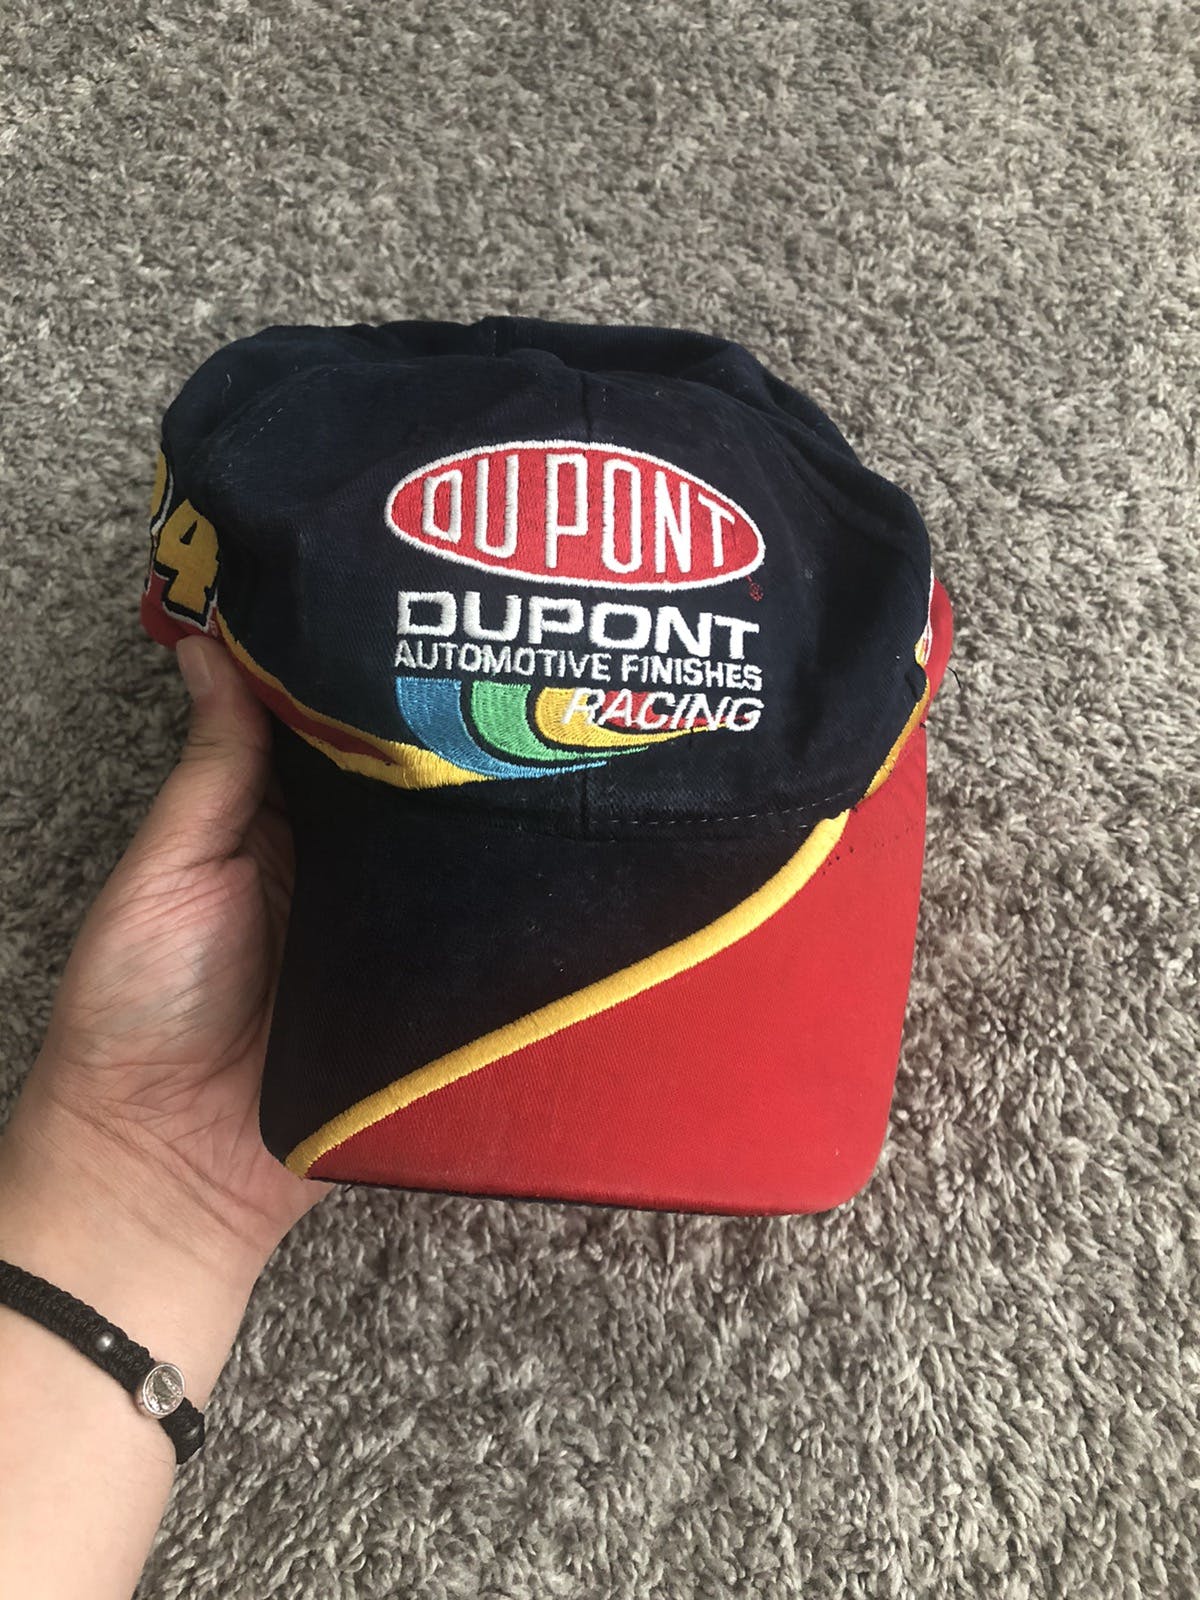 Vintage NASCAR Jeff Gordon Racing Hat - 1